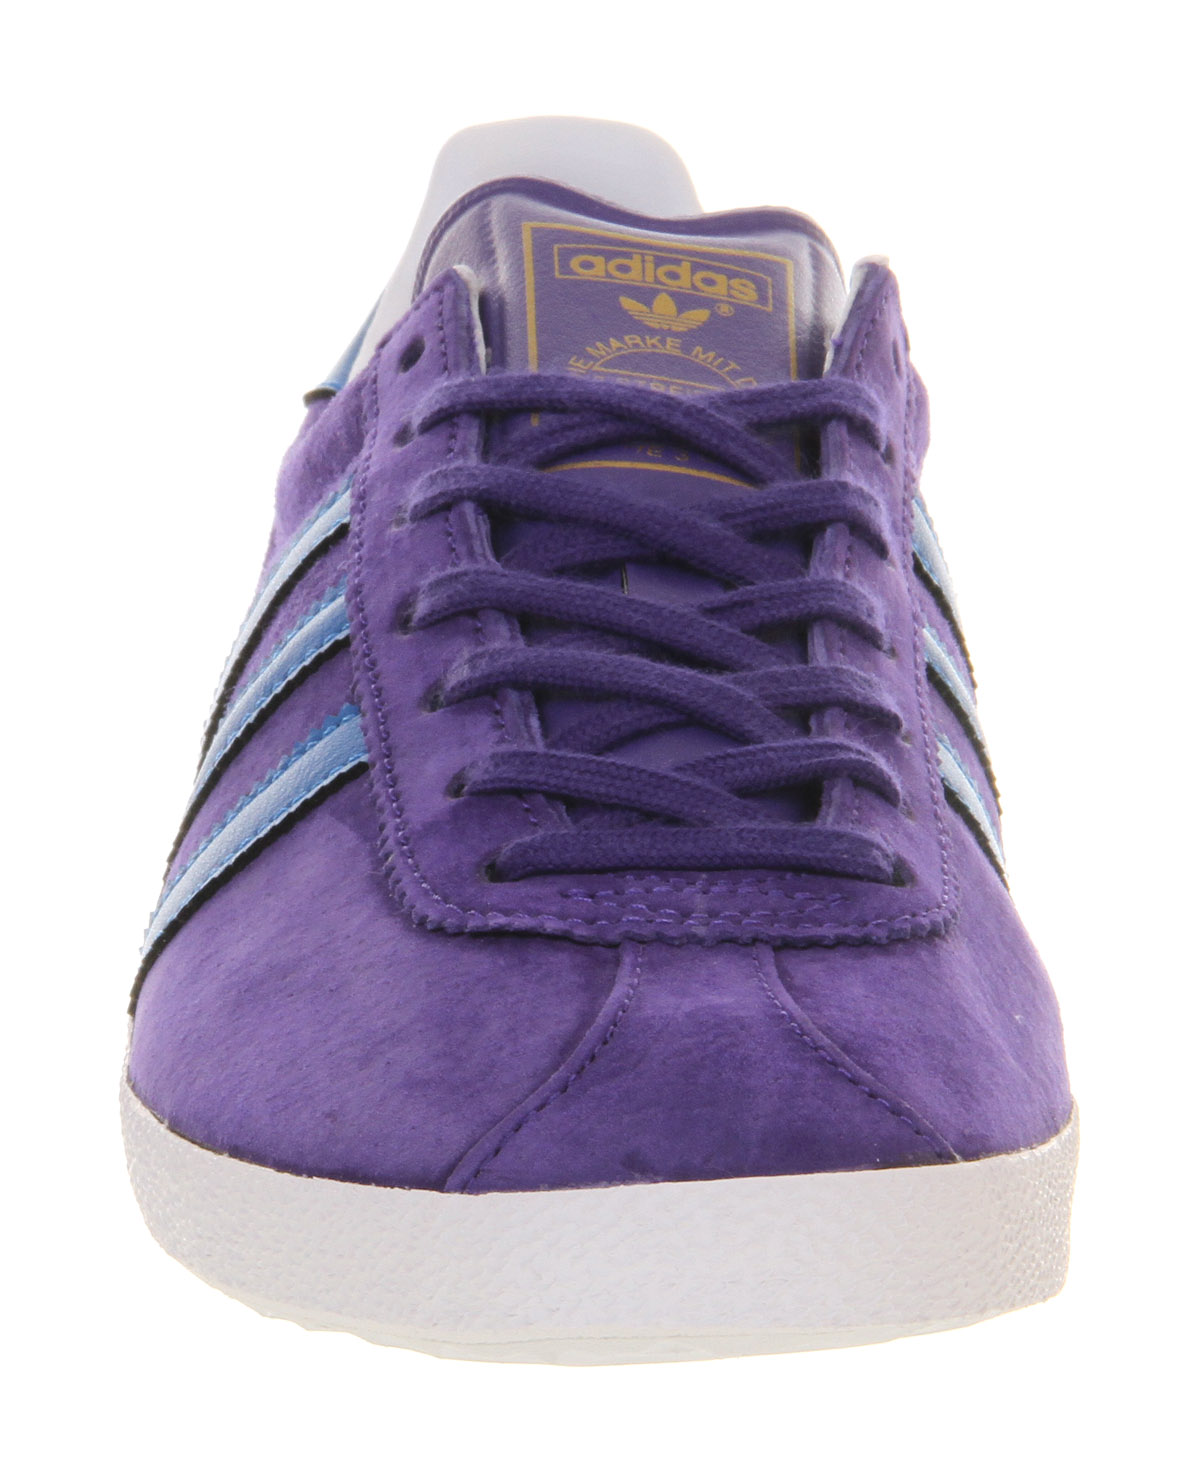 adidas Gazelle Og W in Purple | Lyst